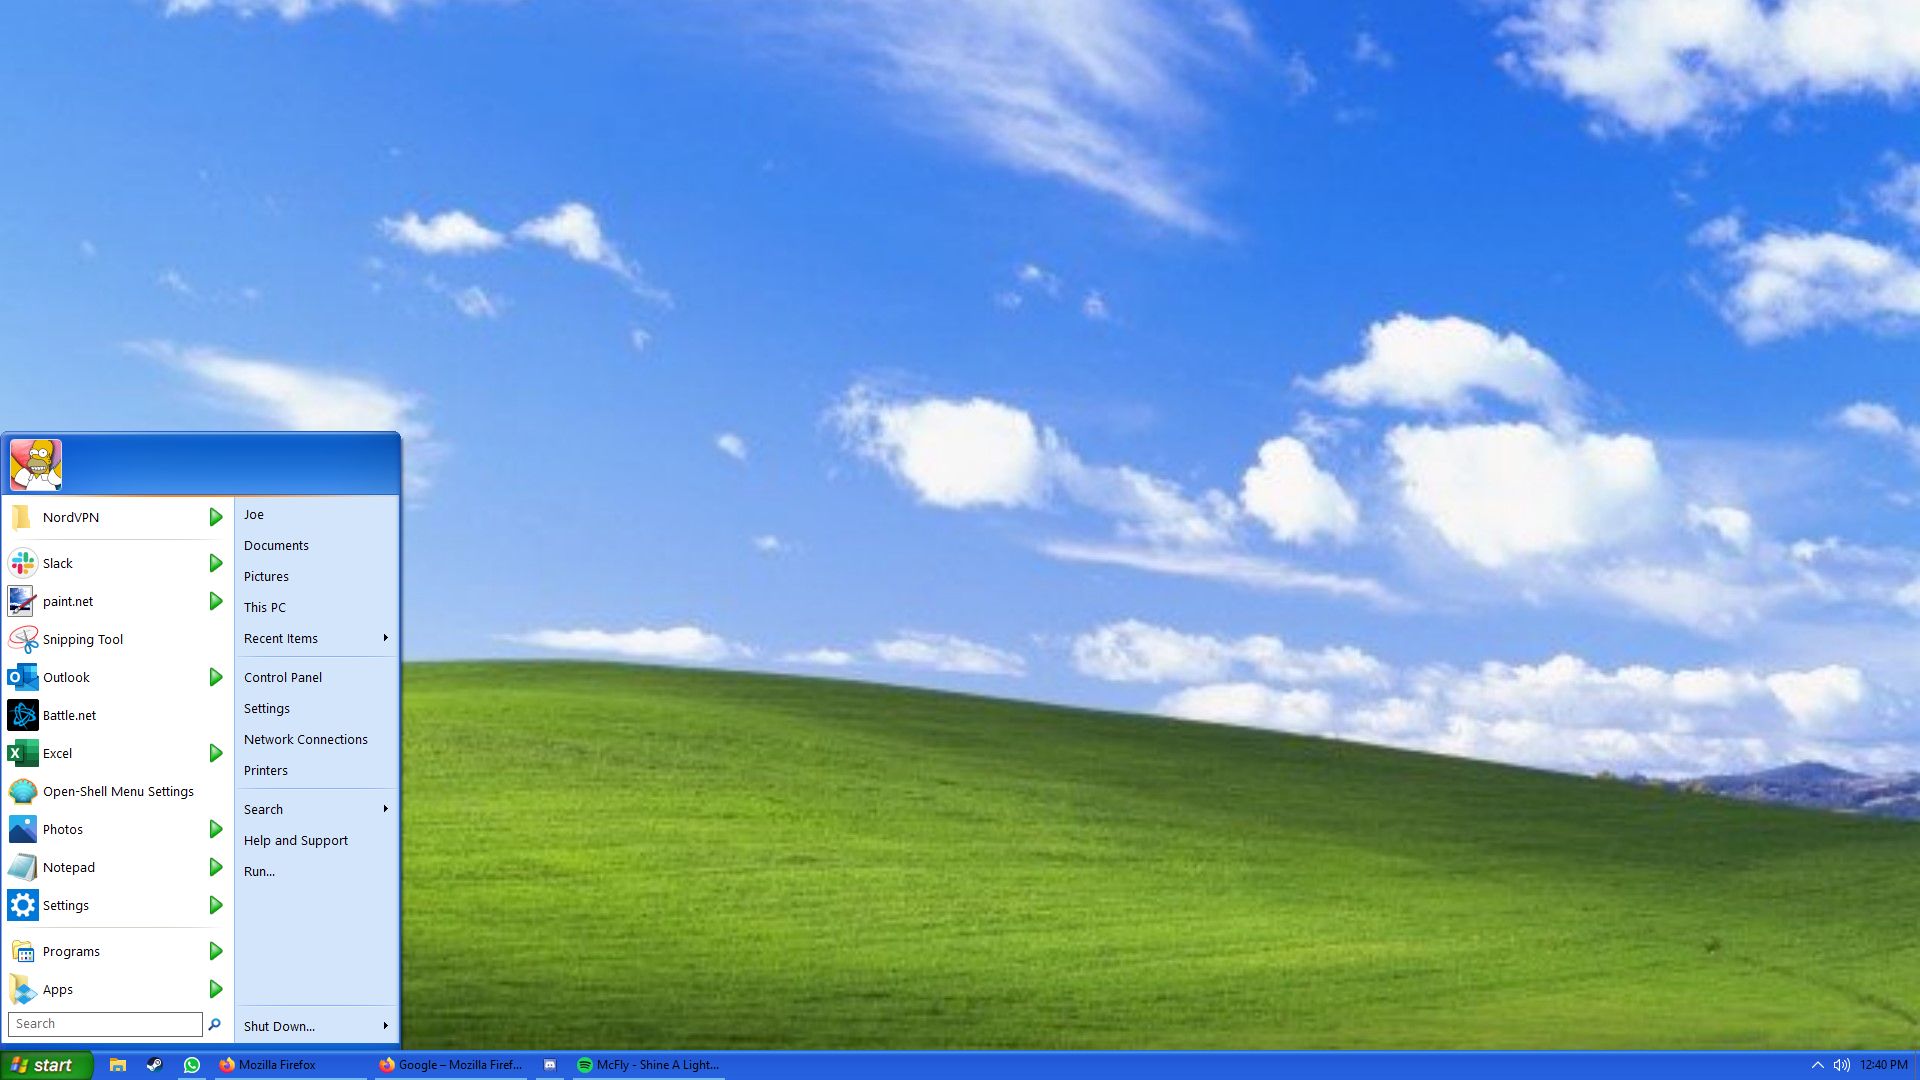 windows xp emulator for windows